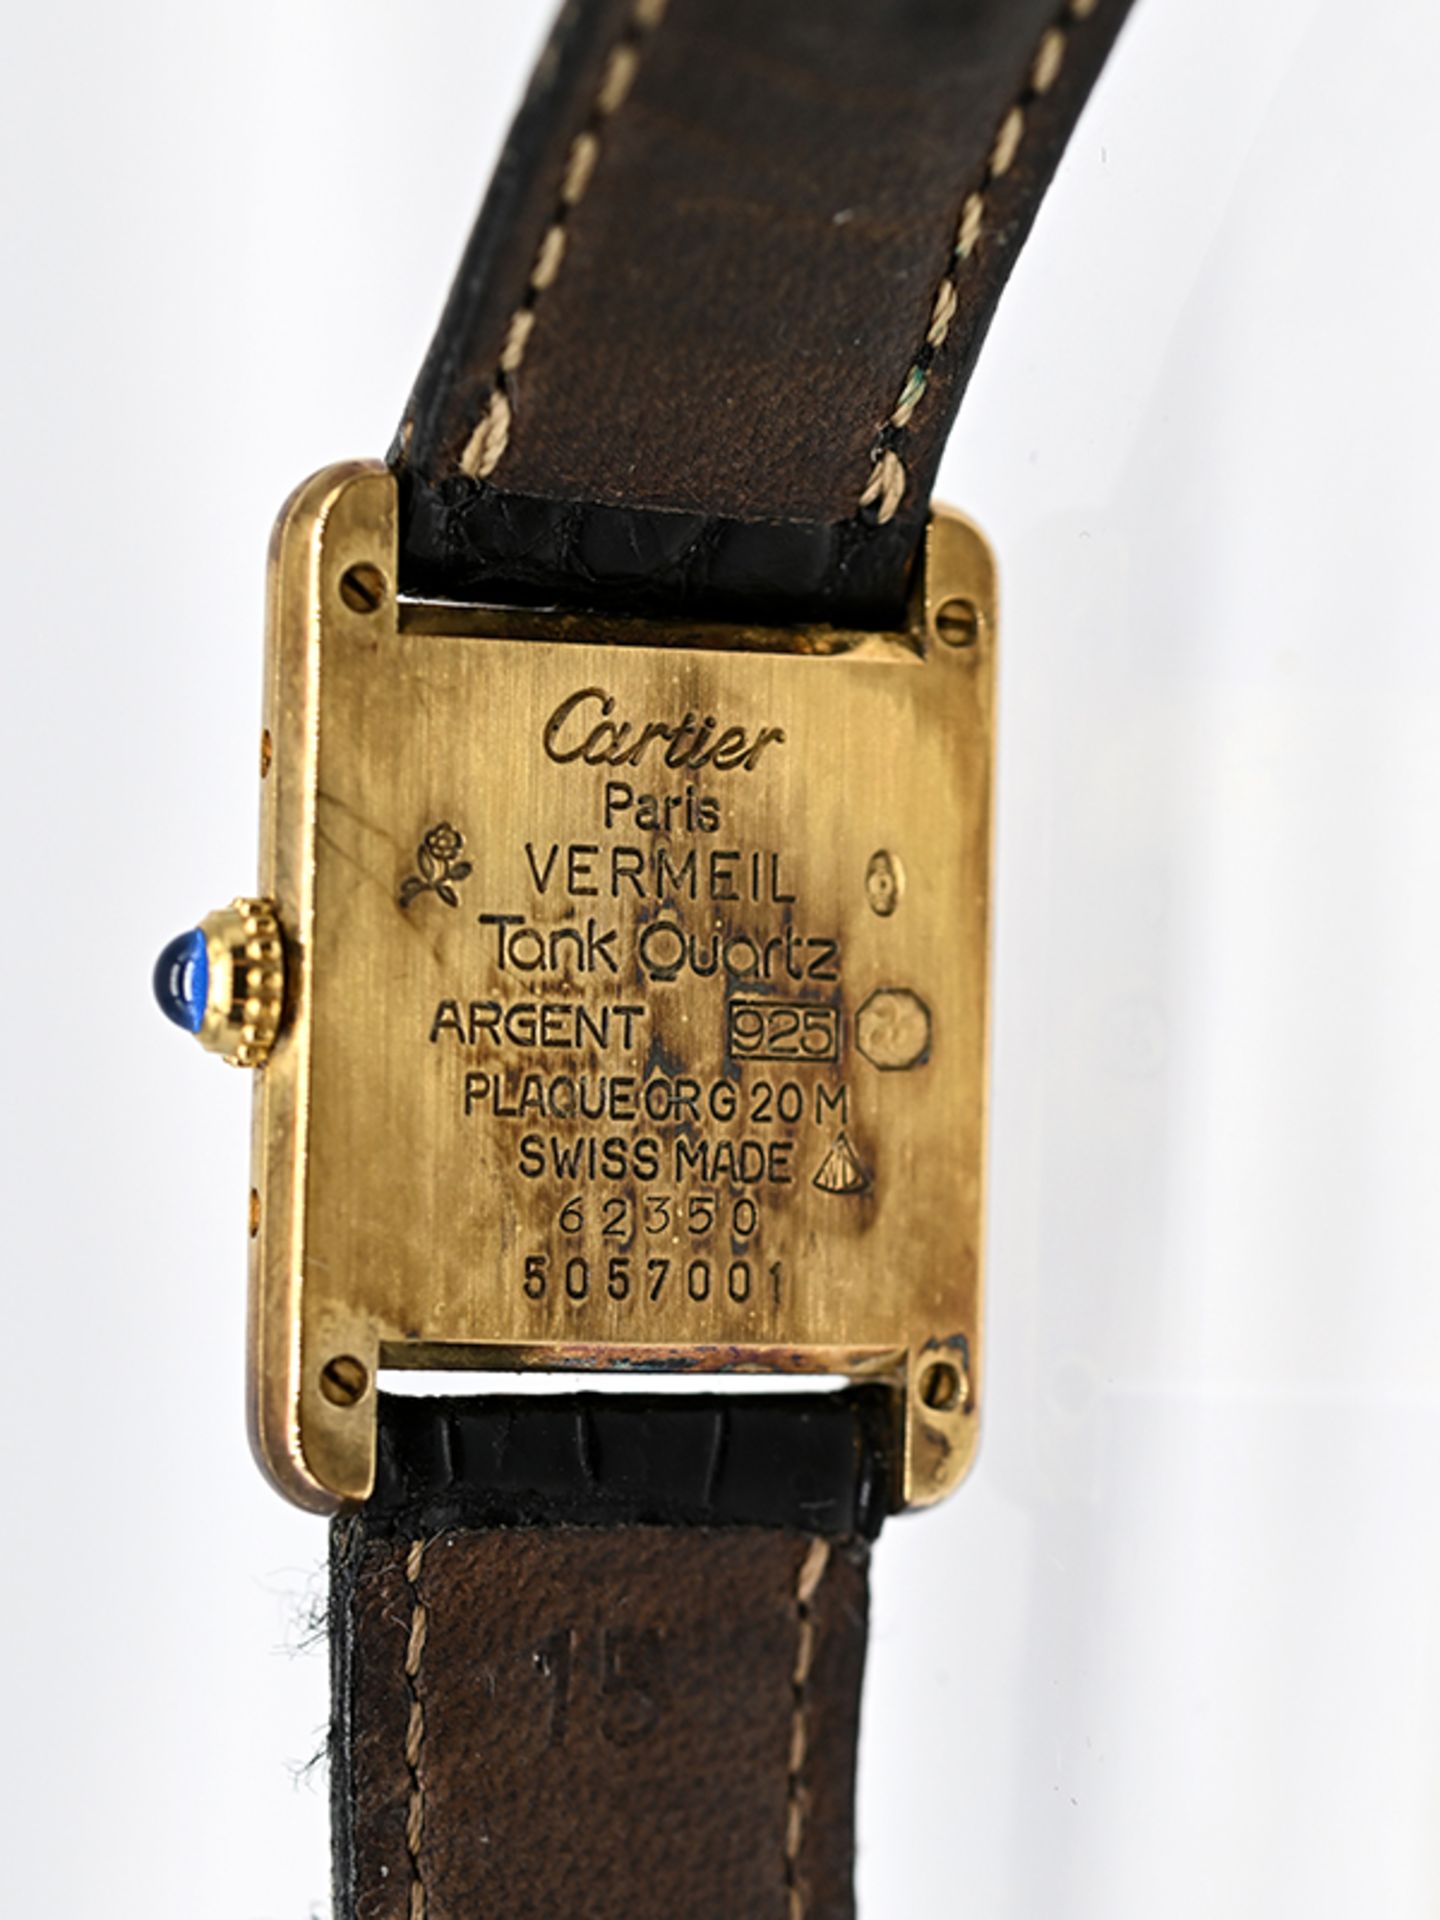 Damenarmbanduhr, Modell: Tank, Cartier, Paris, 80- er Jahre. - Bild 2 aus 3